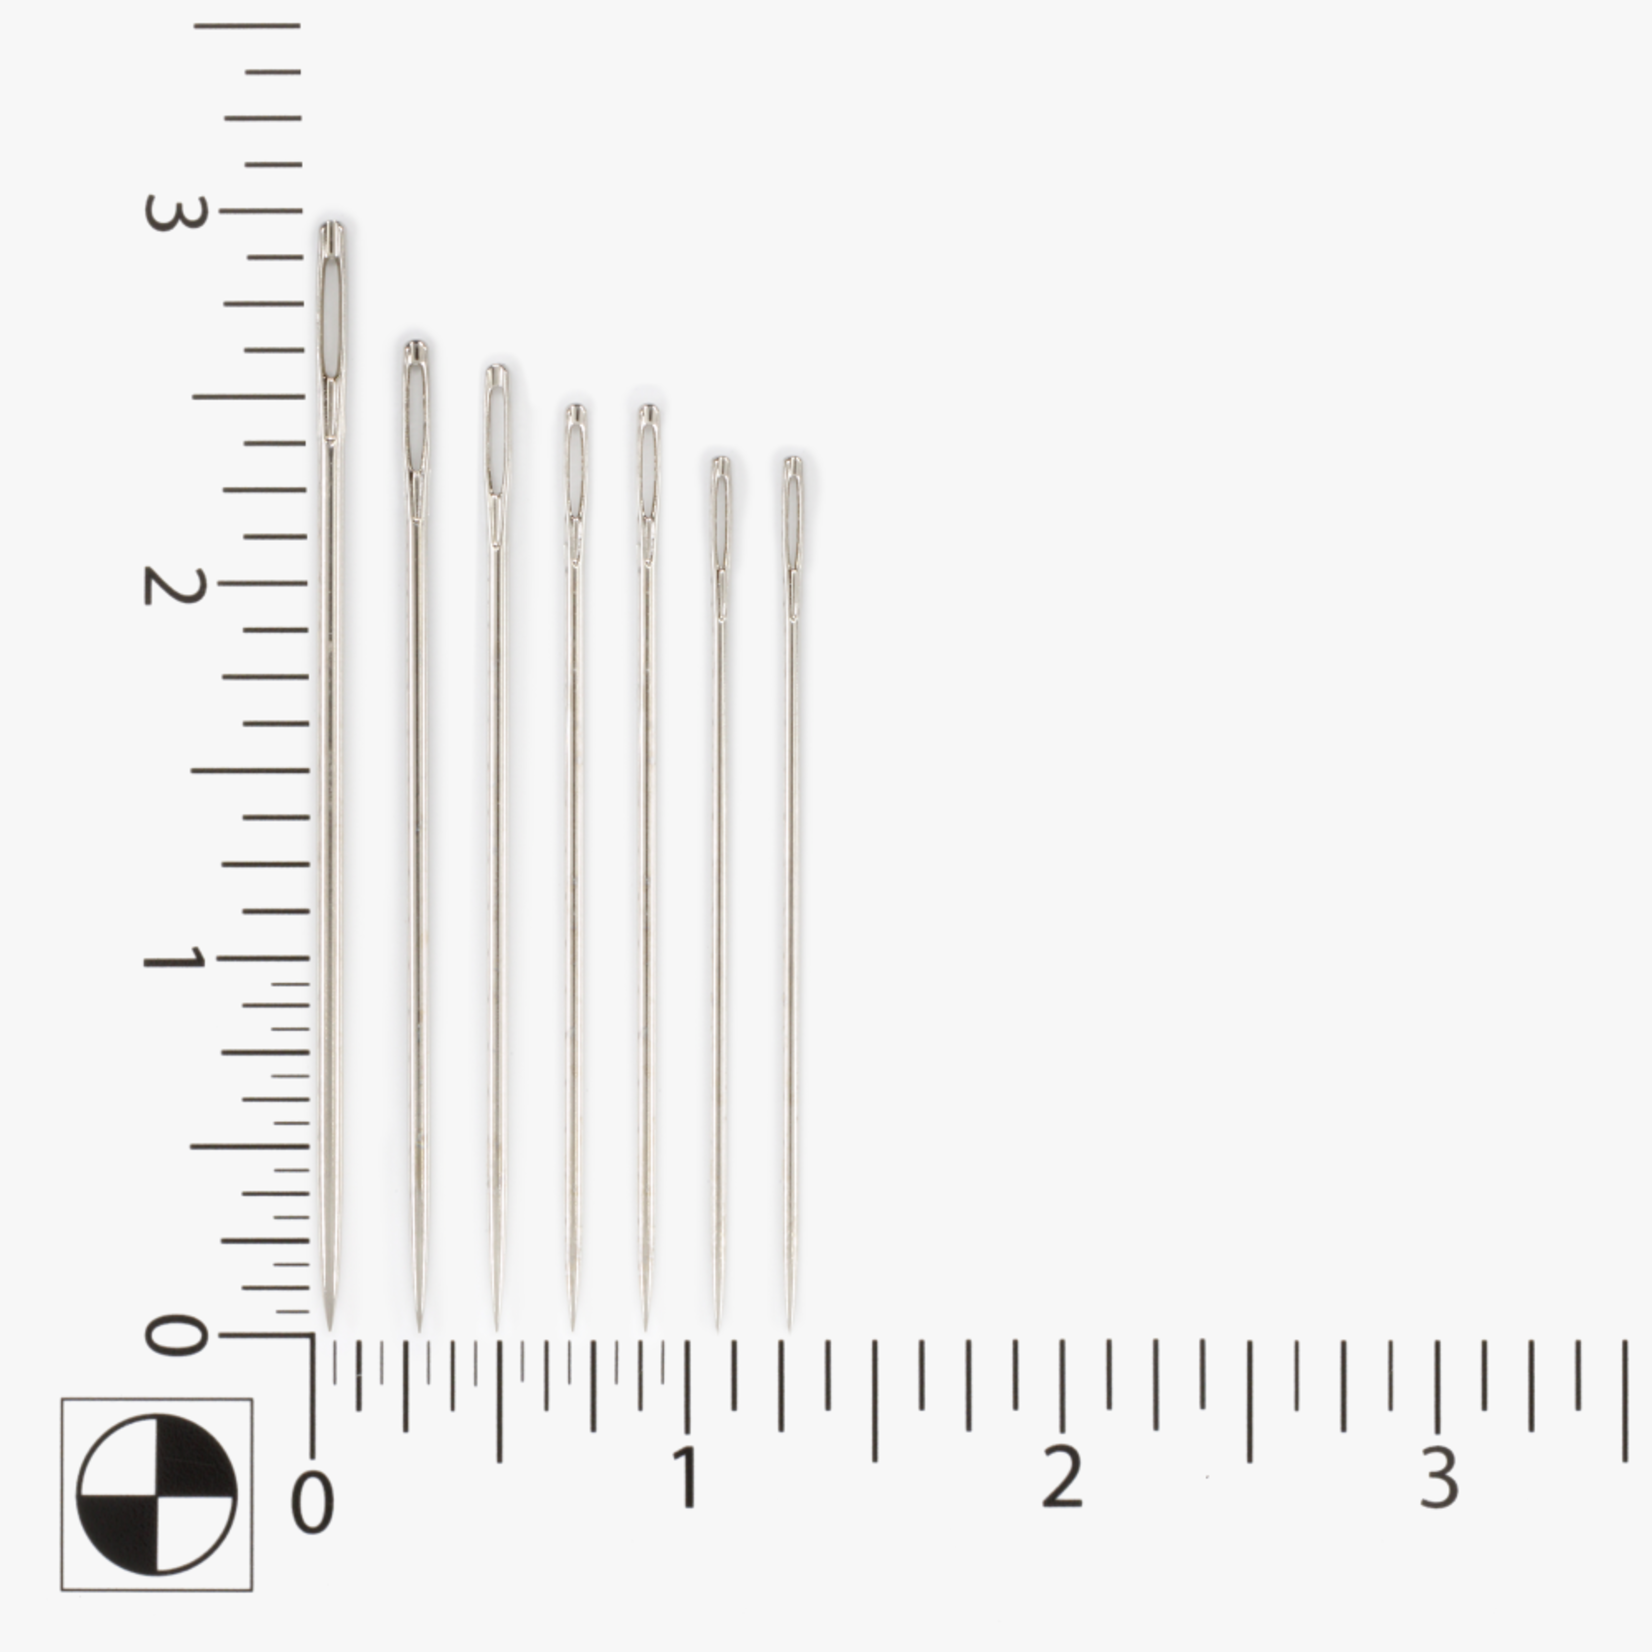 Dritz Yarn Darning Needle SZ14/18 - 56YD